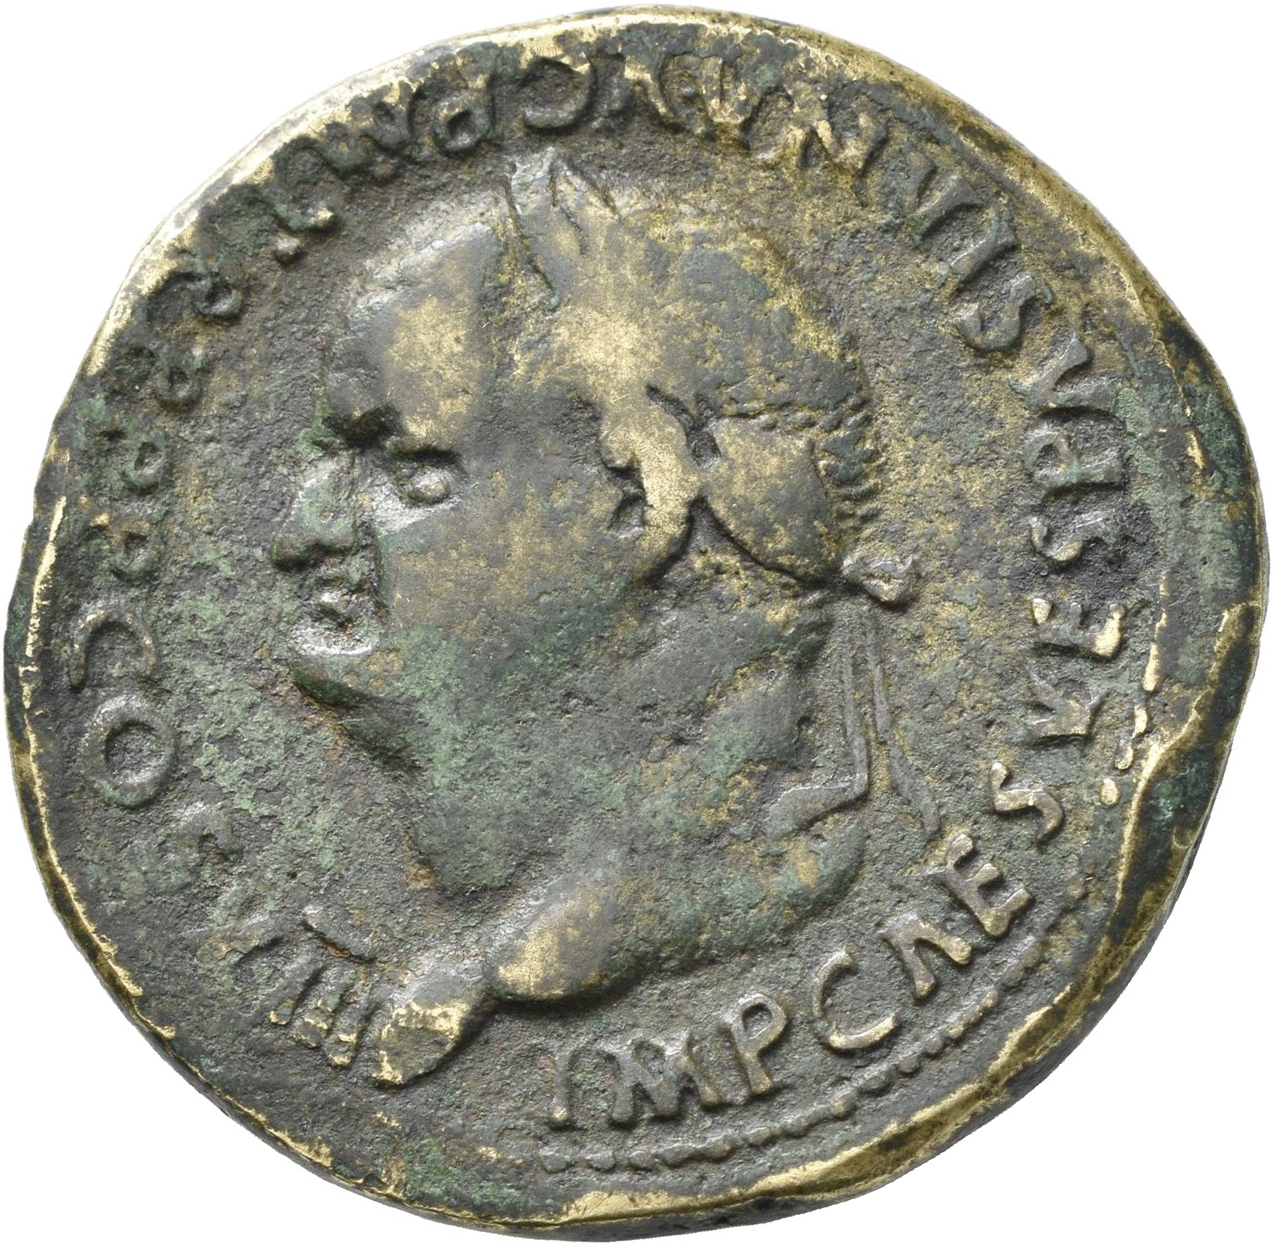 Lot 13013 - Vespasian (69 - 79) | Antike - Rom - Kaiserzeit  -  Auktionshaus Christoph Gärtner GmbH & Co. KG 53rd AUCTION - Day 6 Coins/Banknotes